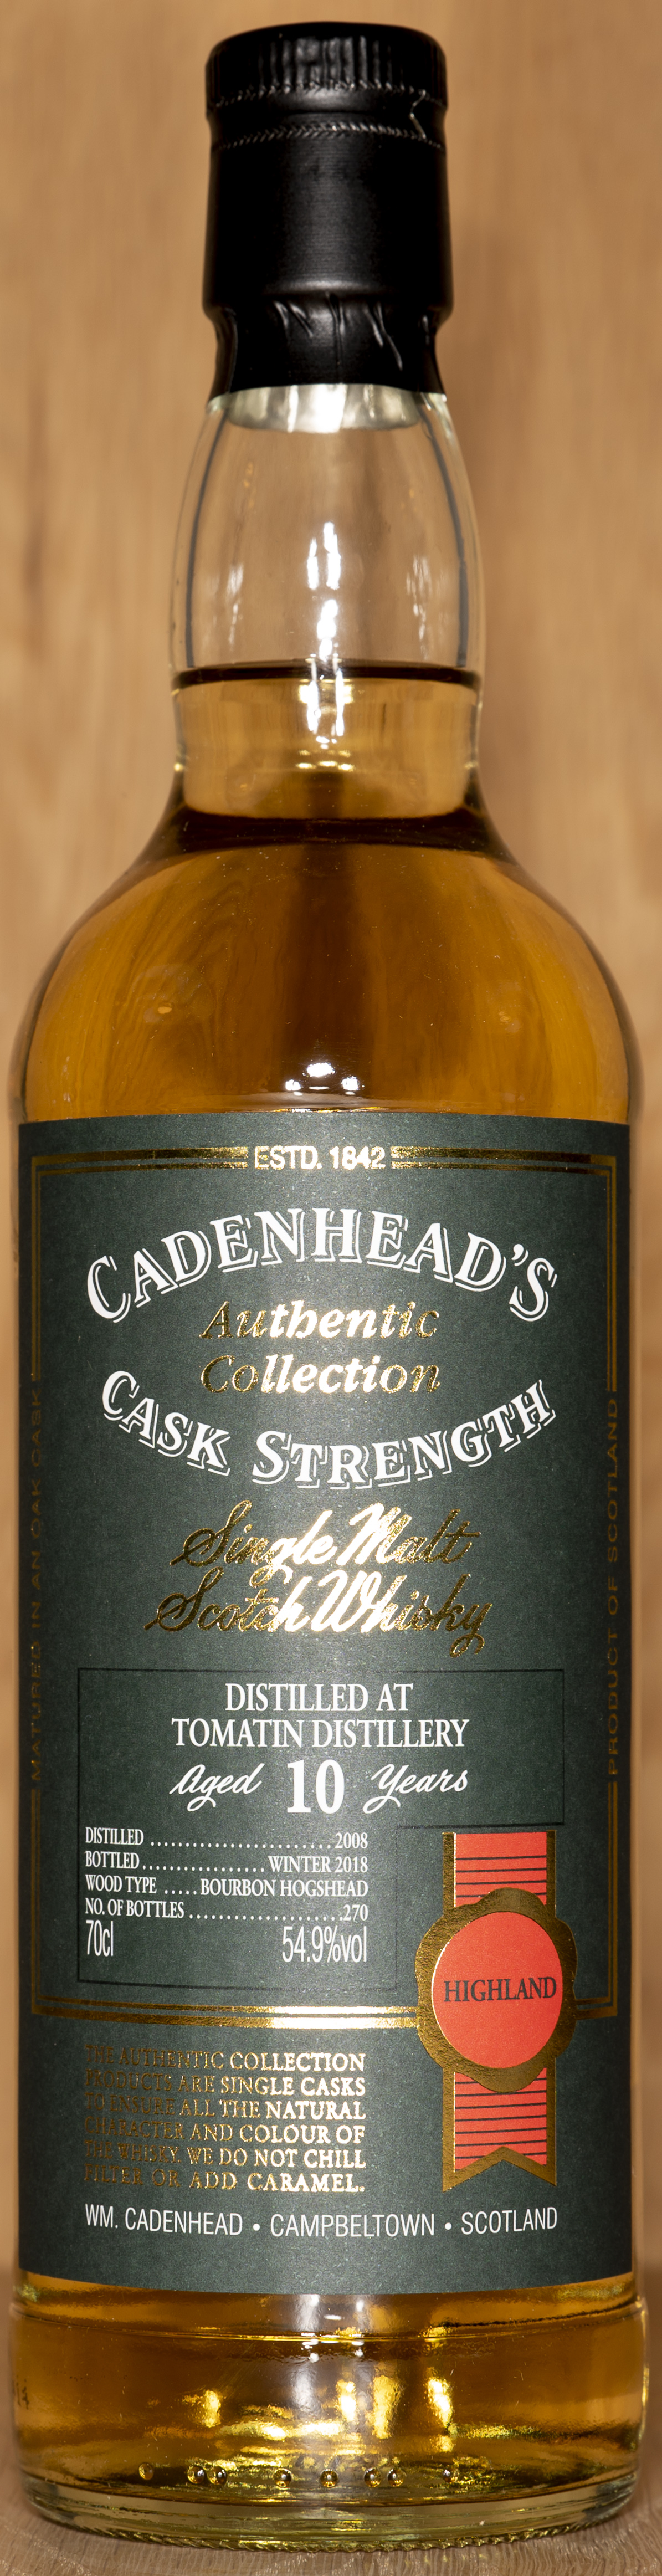 Billede: DSC_5004 - Cadenheads Authentic Collection Tomation 10 - bottle front.jpg